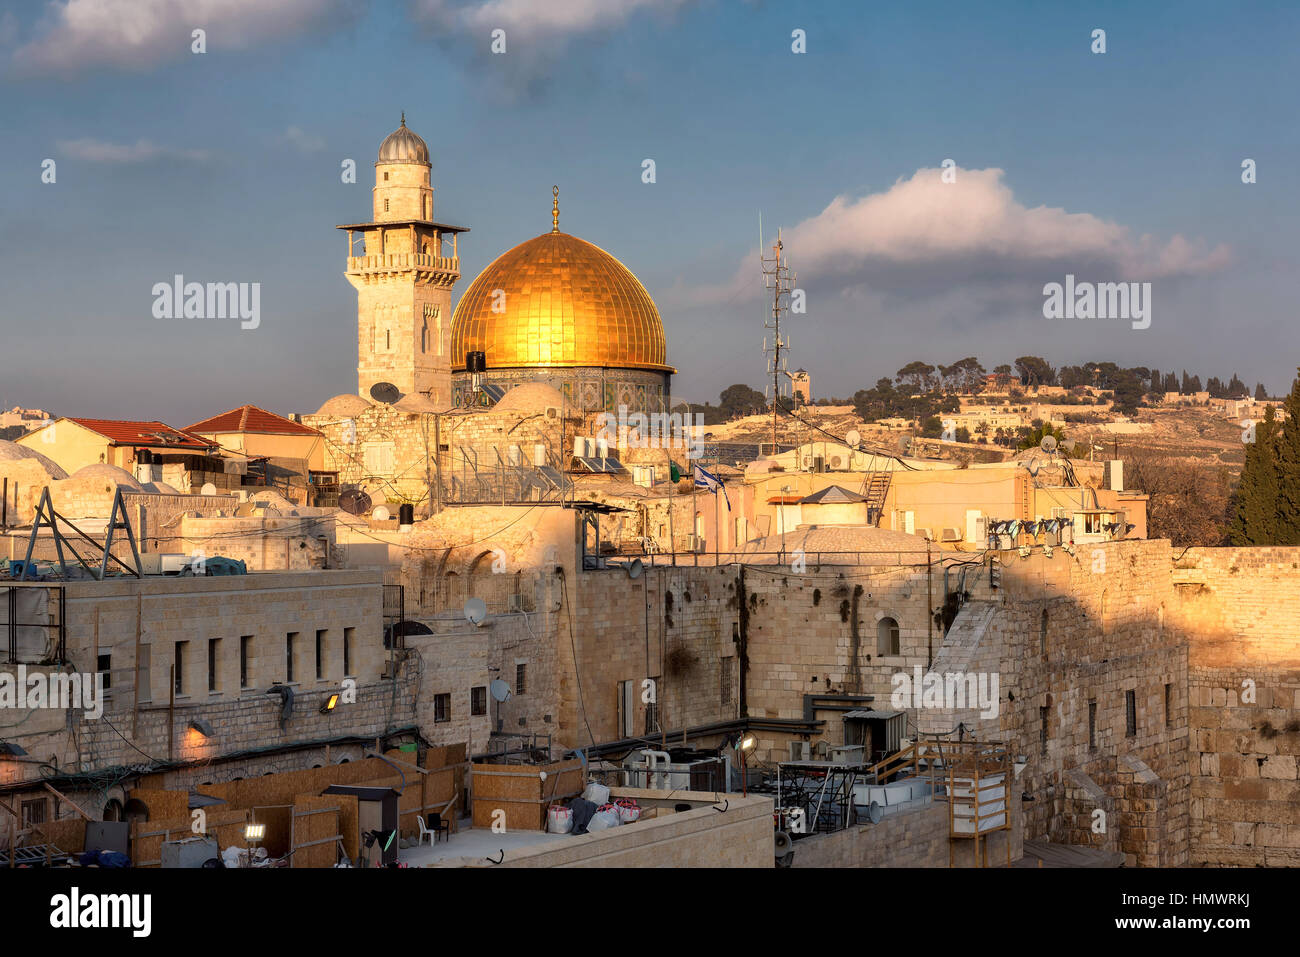 Ein Blick auf die goldene Kuppel des Felsens bei Sonnenuntergang, Jerusalem, Israel. Stockfoto